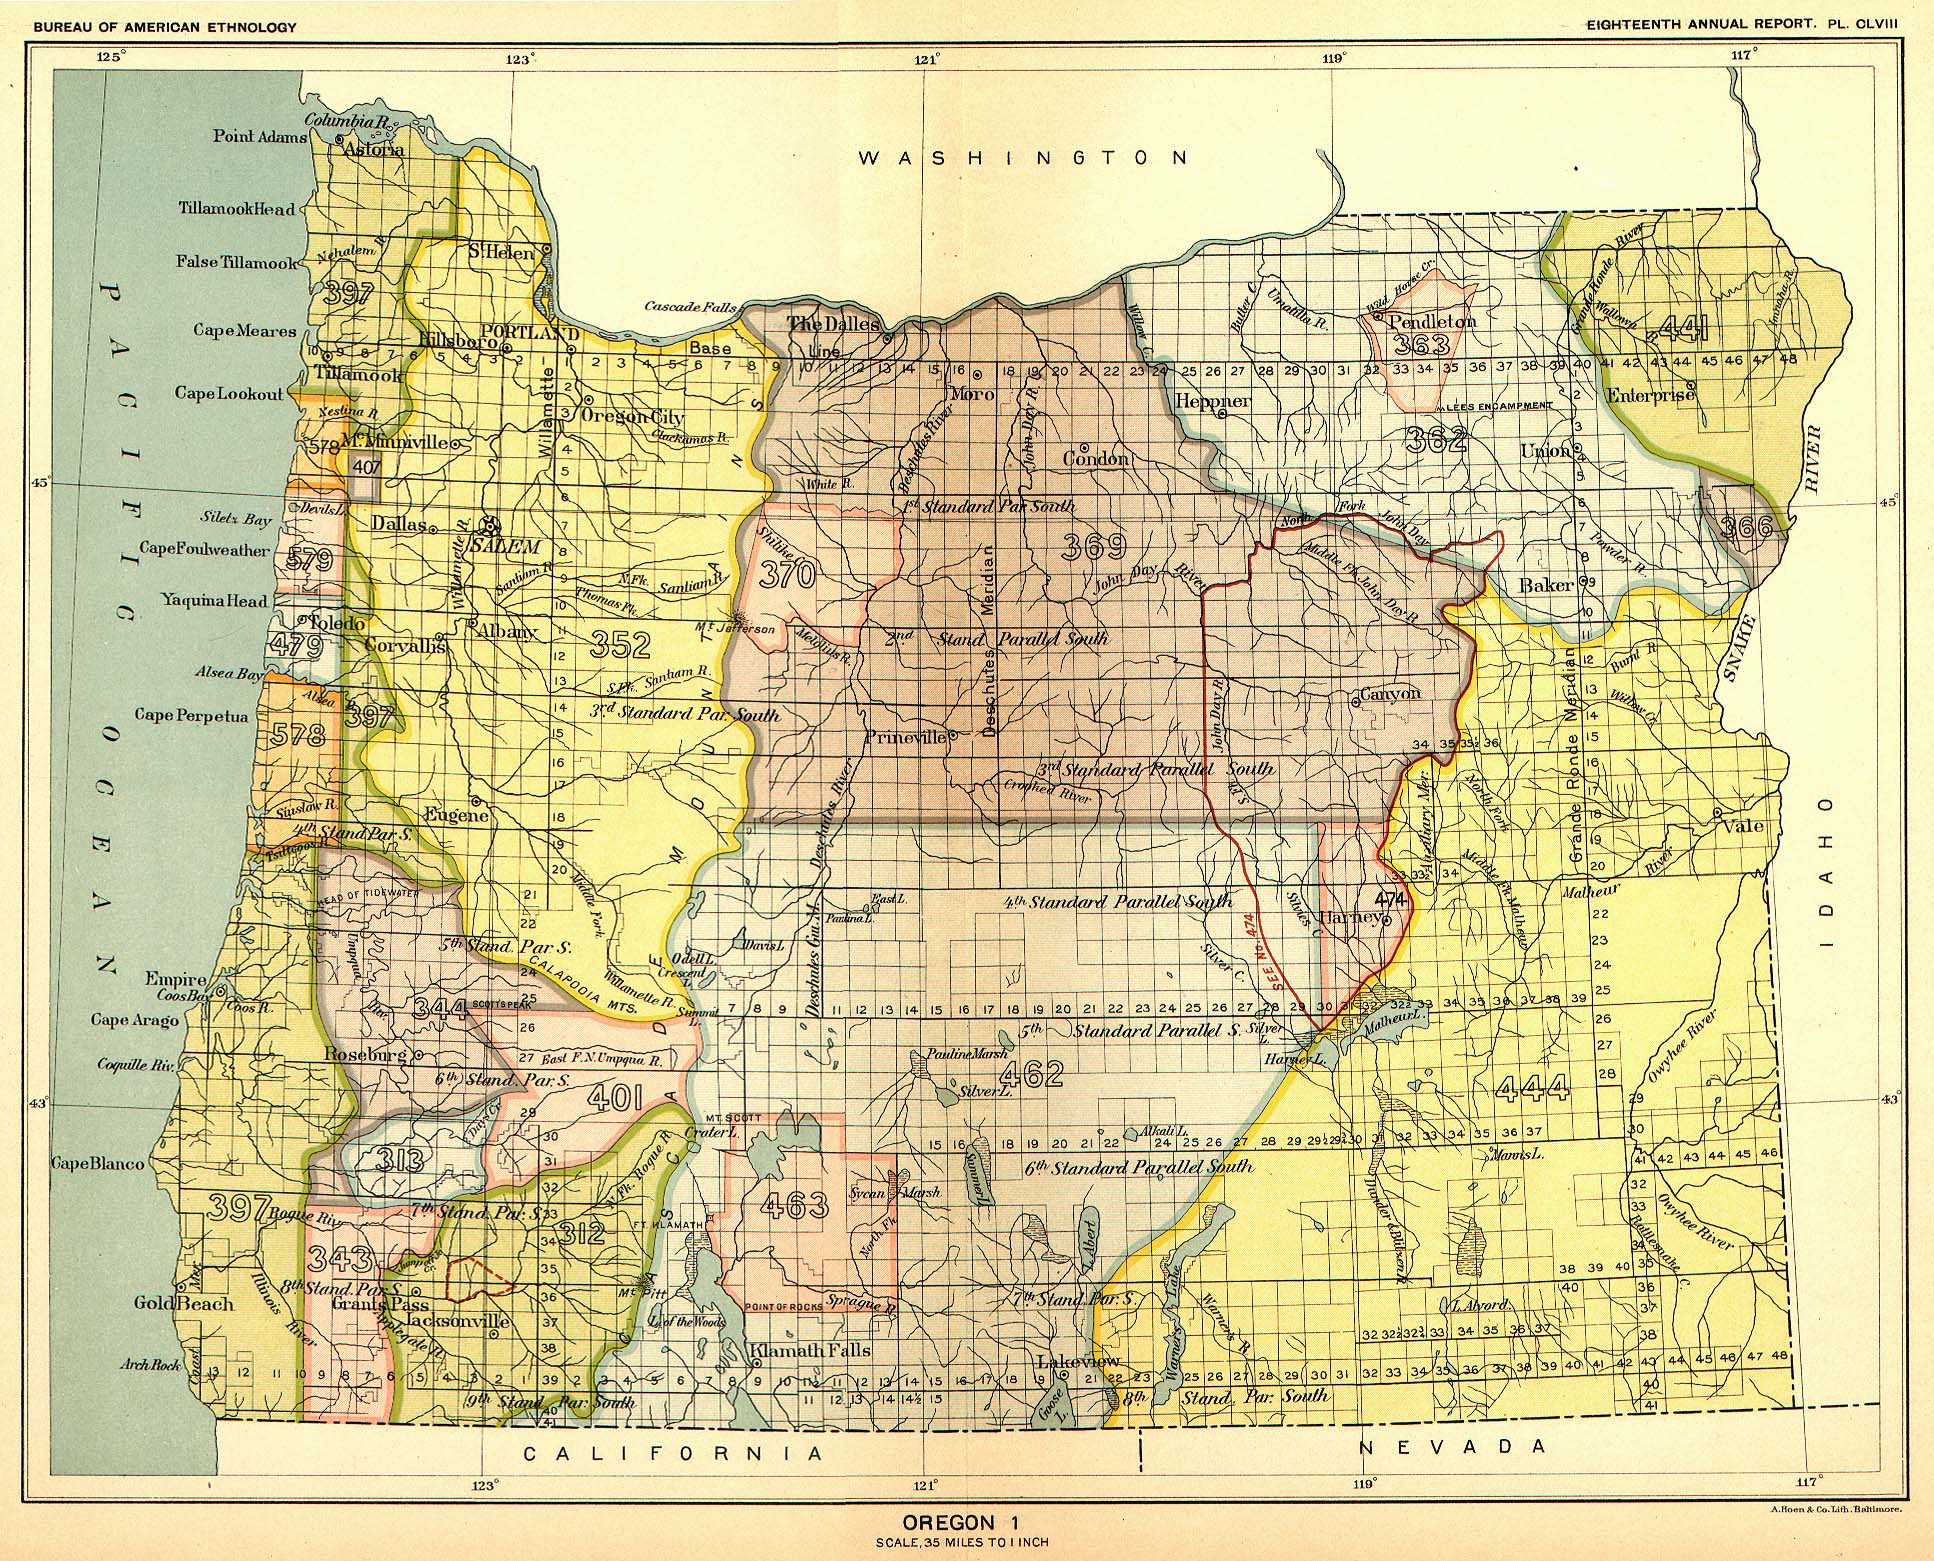 Oregon 1, Map 51